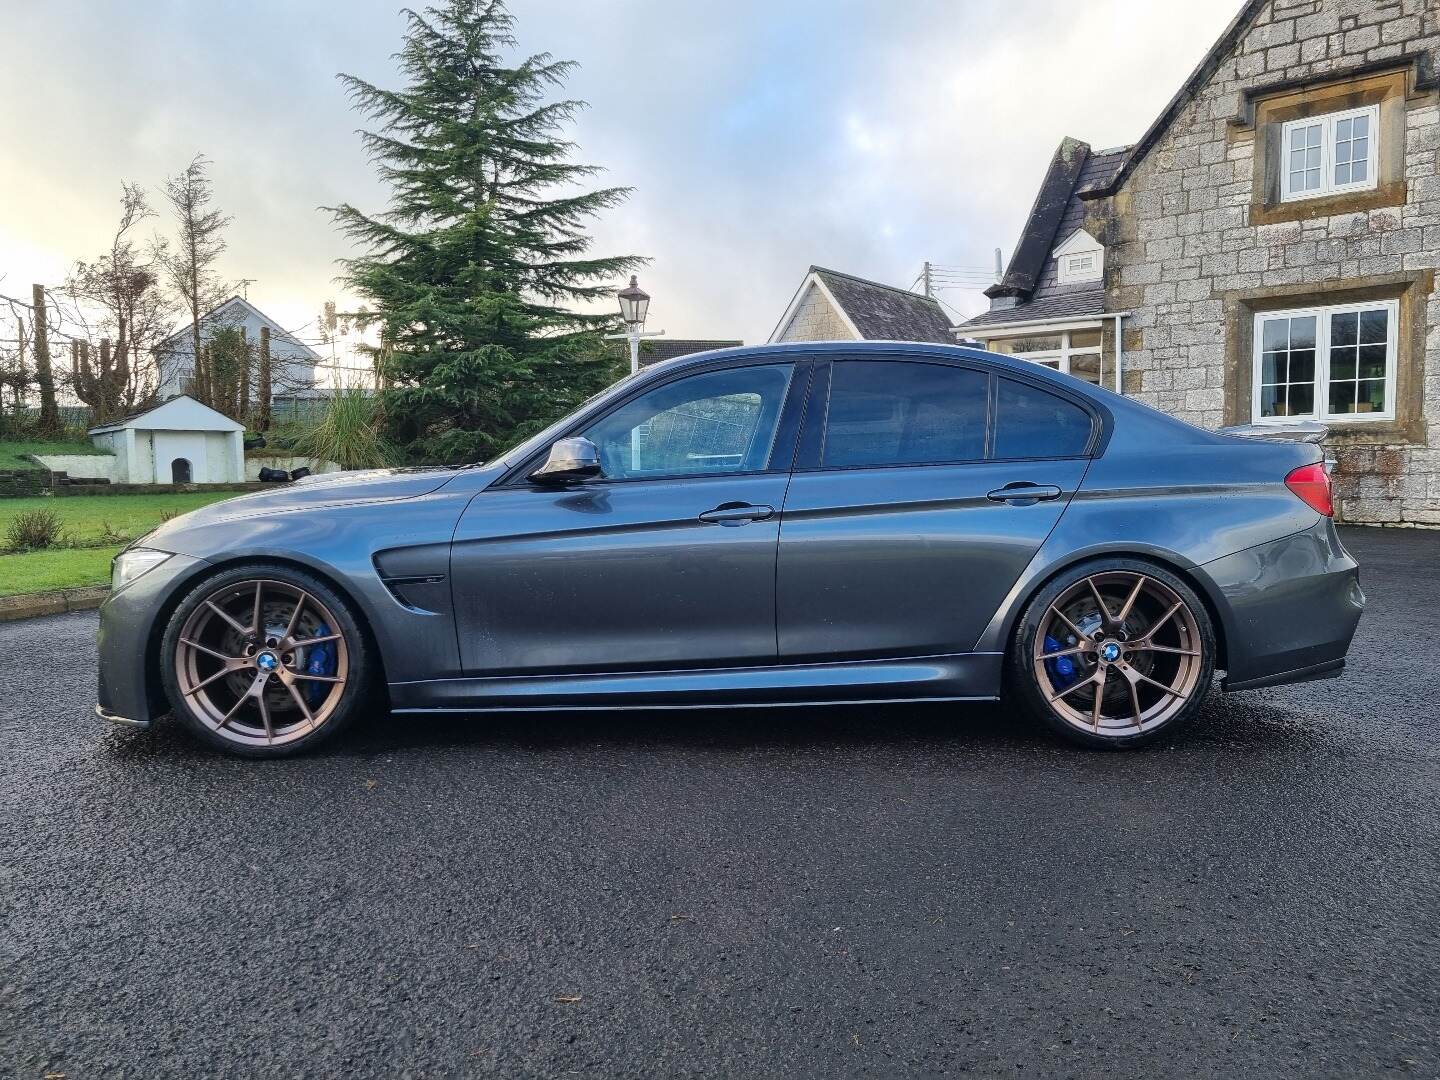 BMW M3 SALOON in Derry / Londonderry